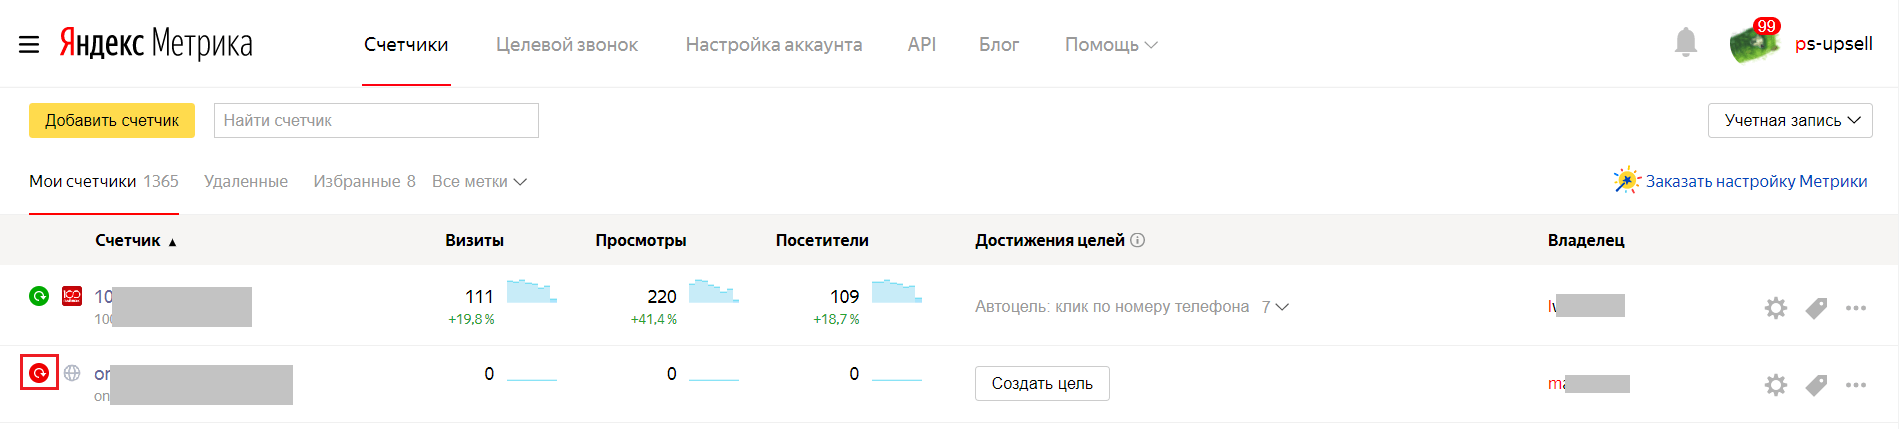 Счетчики в интерфейсе Яндекс.Метрики